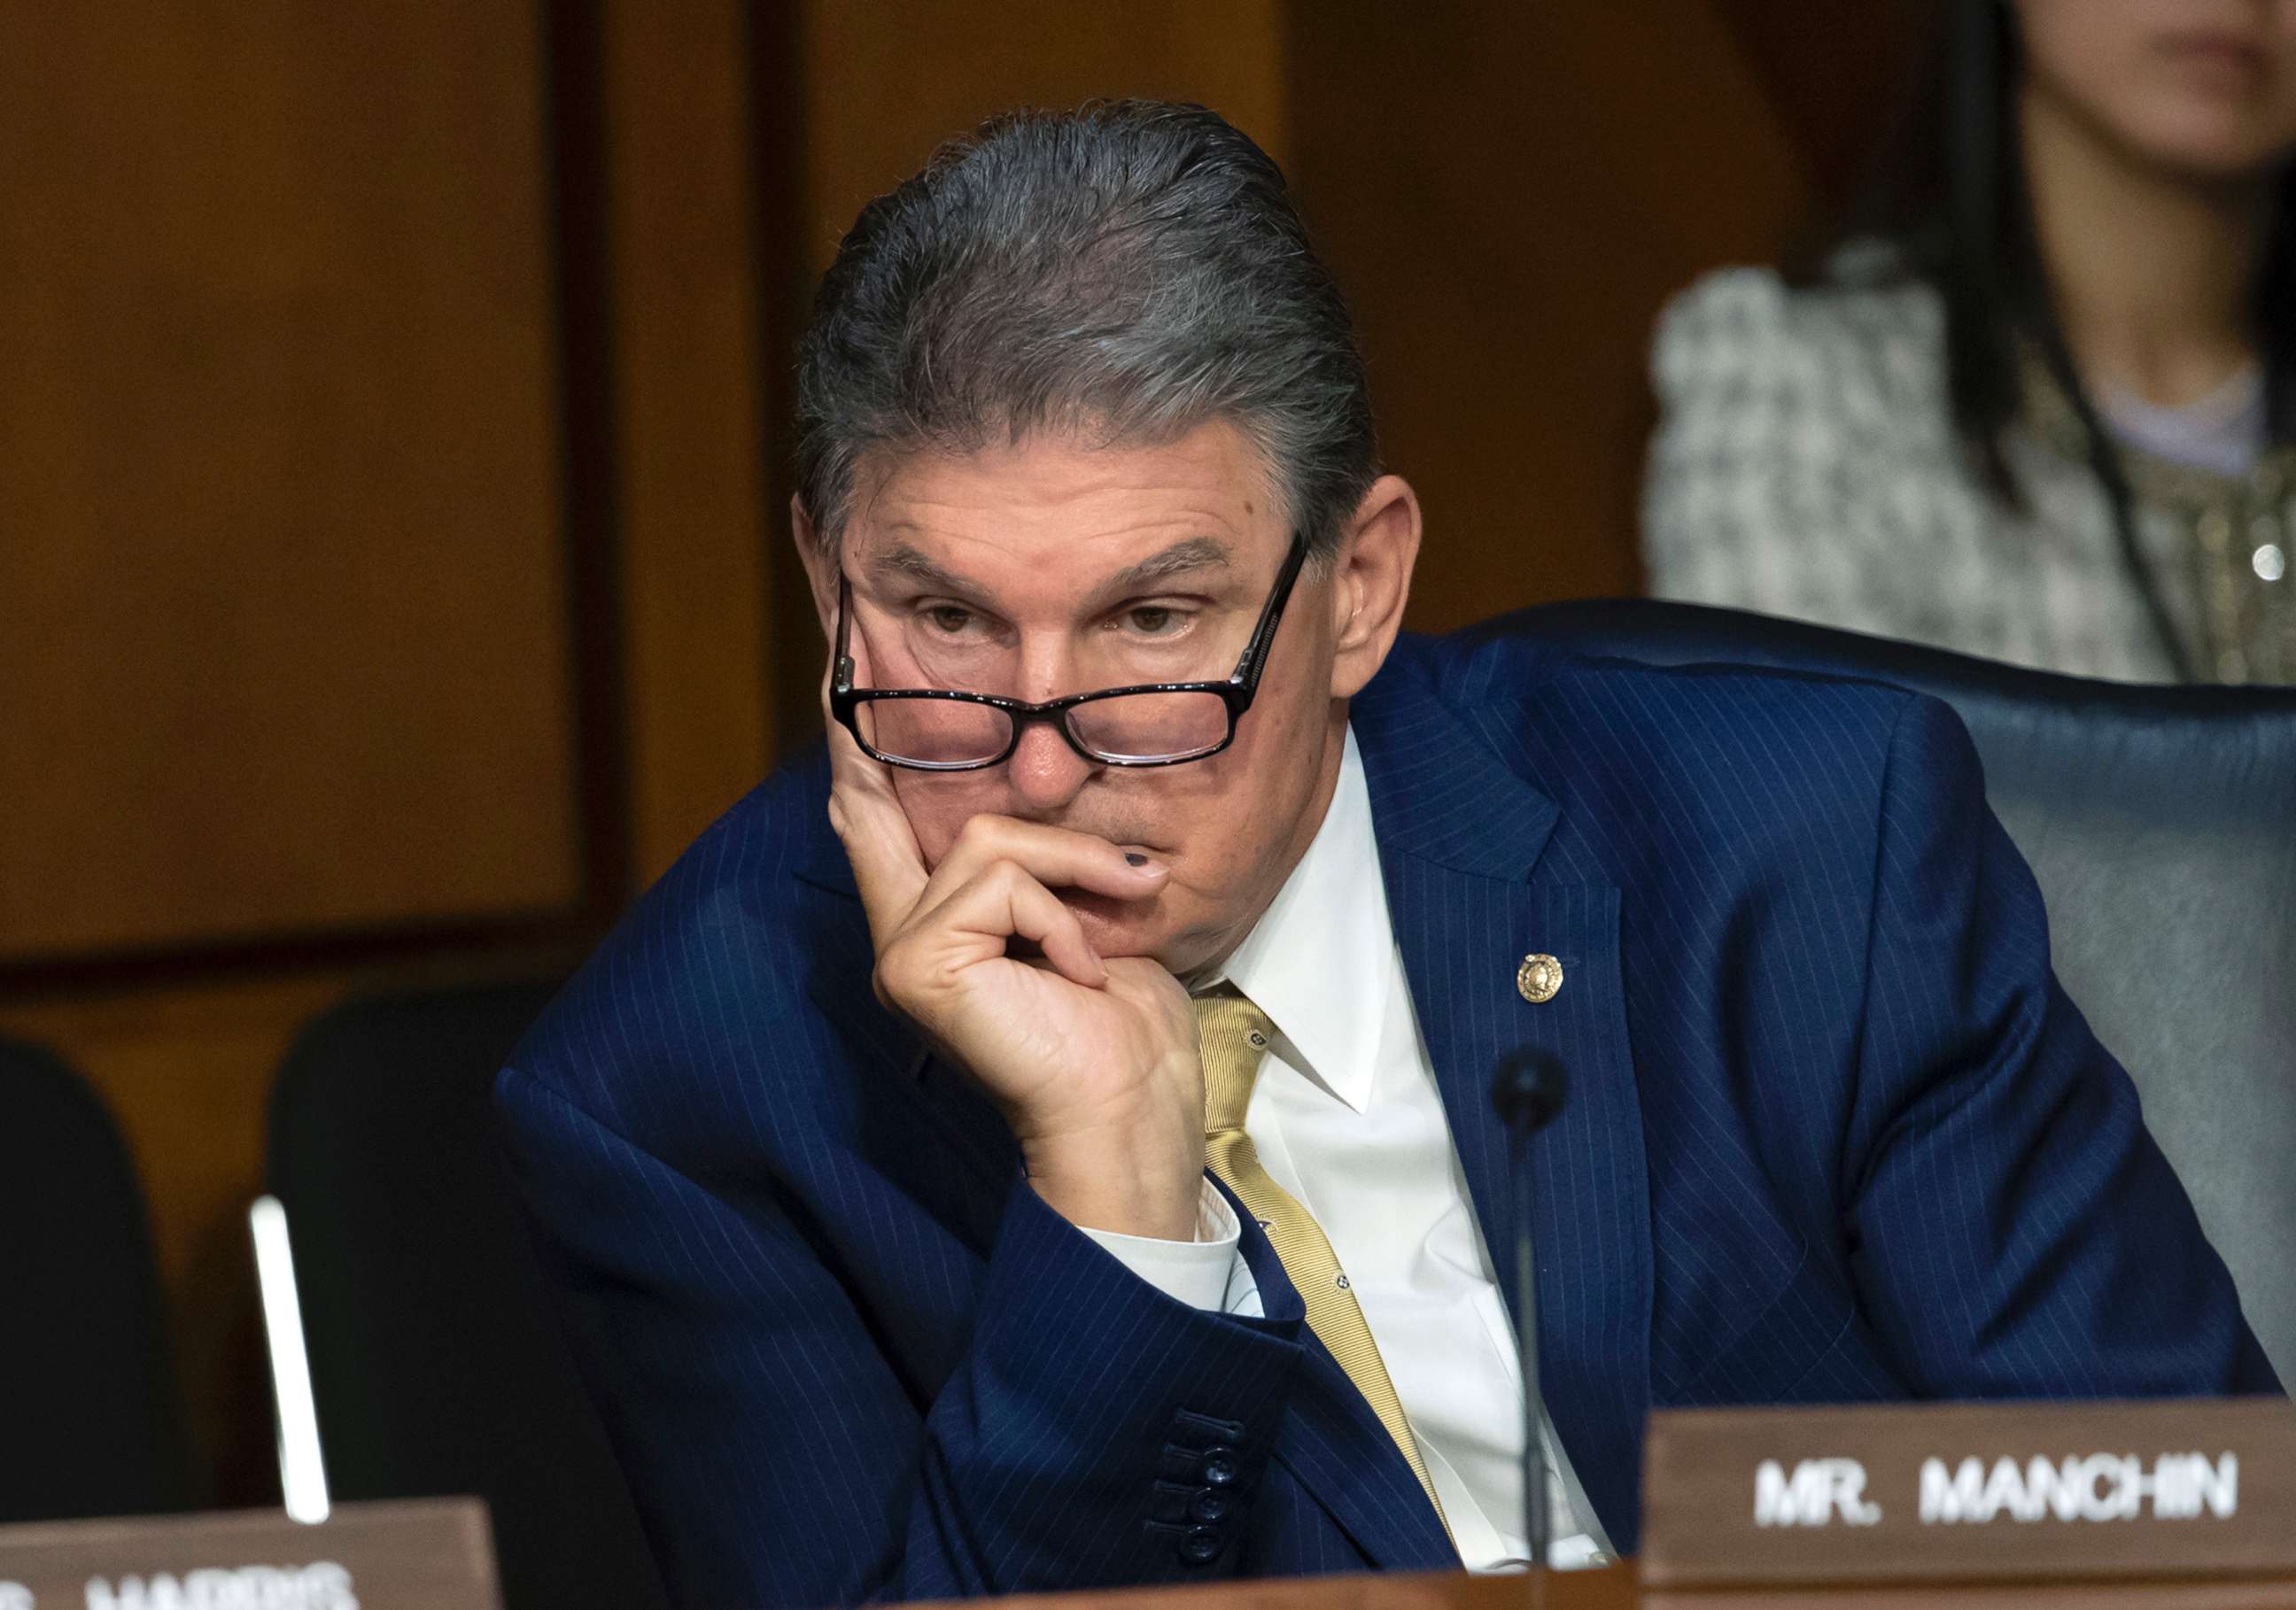 PHOTO: Sen. Joe Manchin listens during a Senate Intelligence Committee hearing on Capitol Hill in Washington, D.C., May 9, 2018.